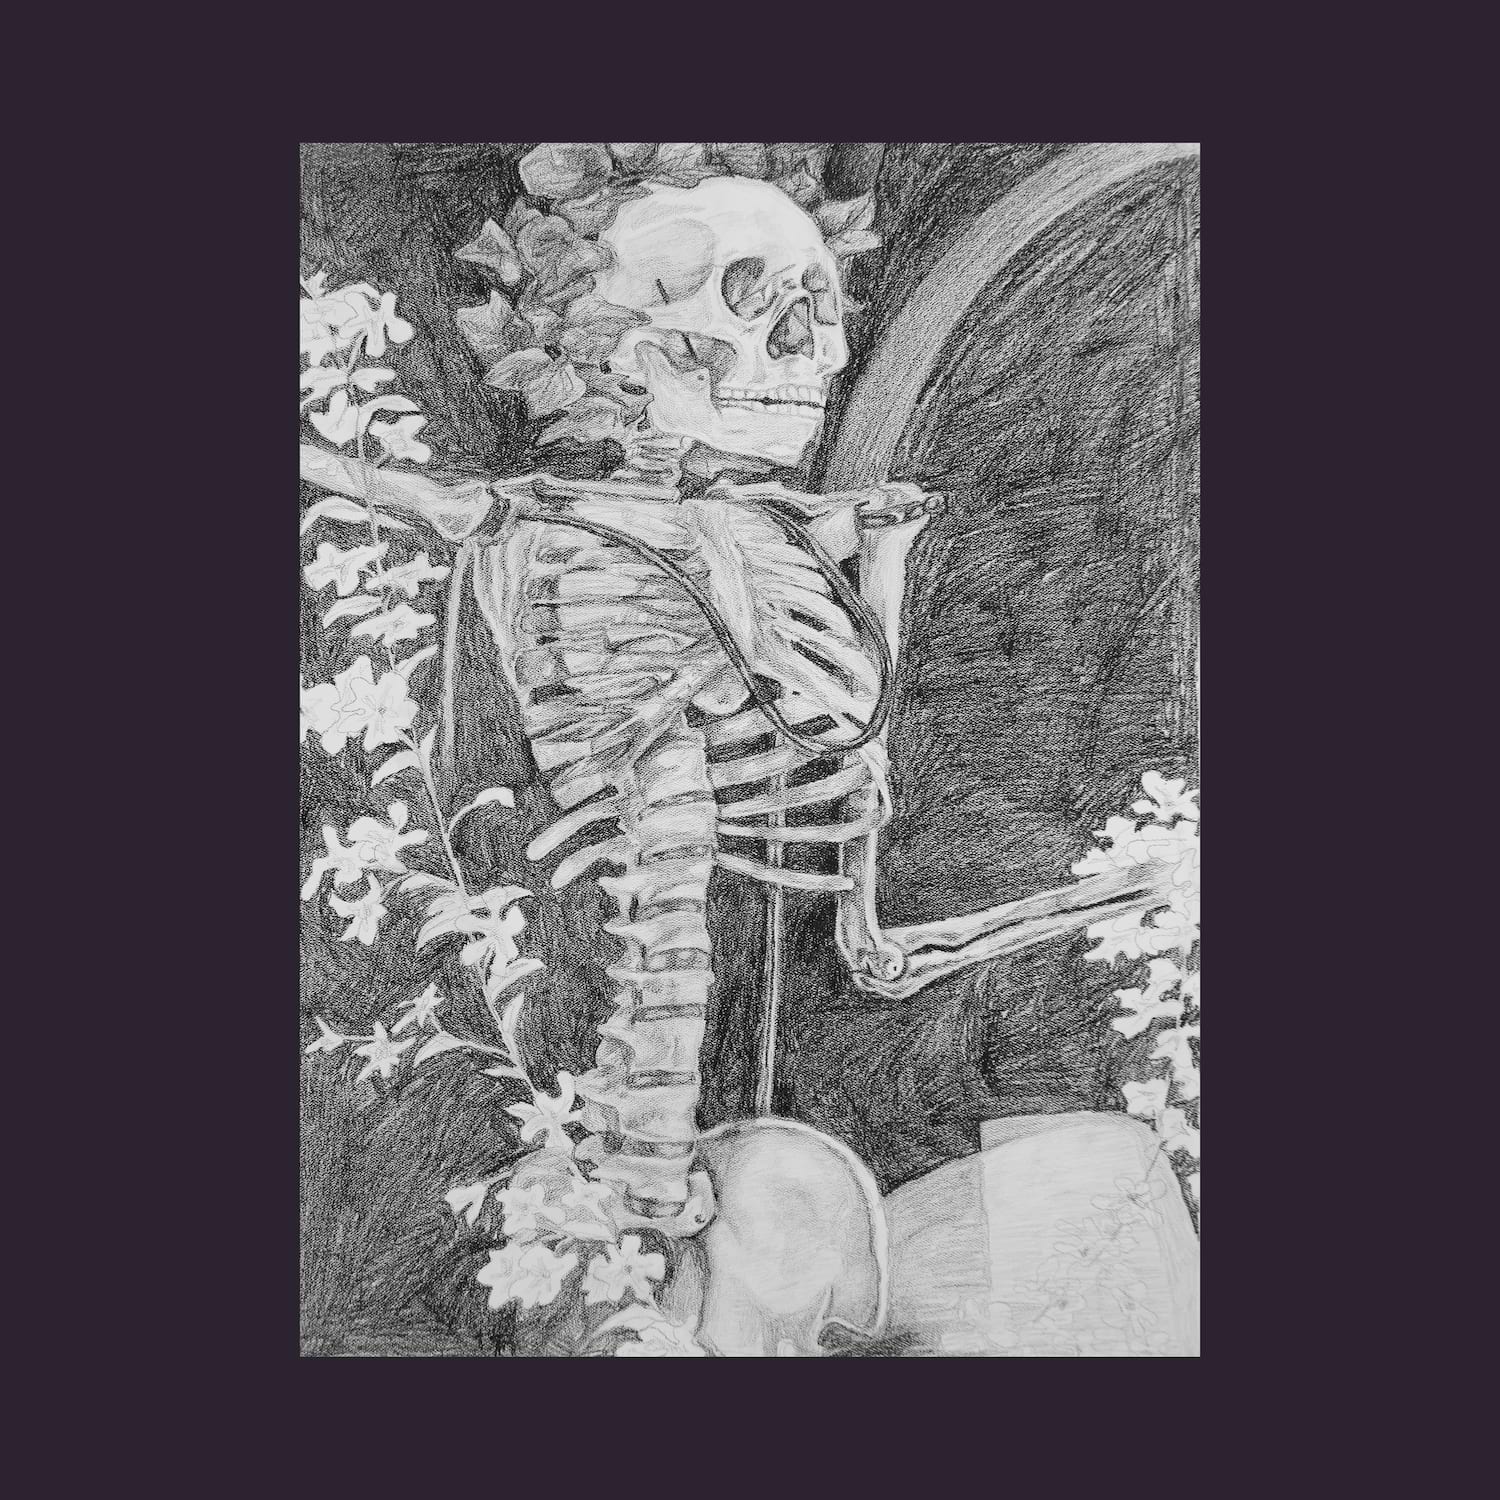  Veronica Hill. Skeleton with Spring Garland. Crayon. 2020.